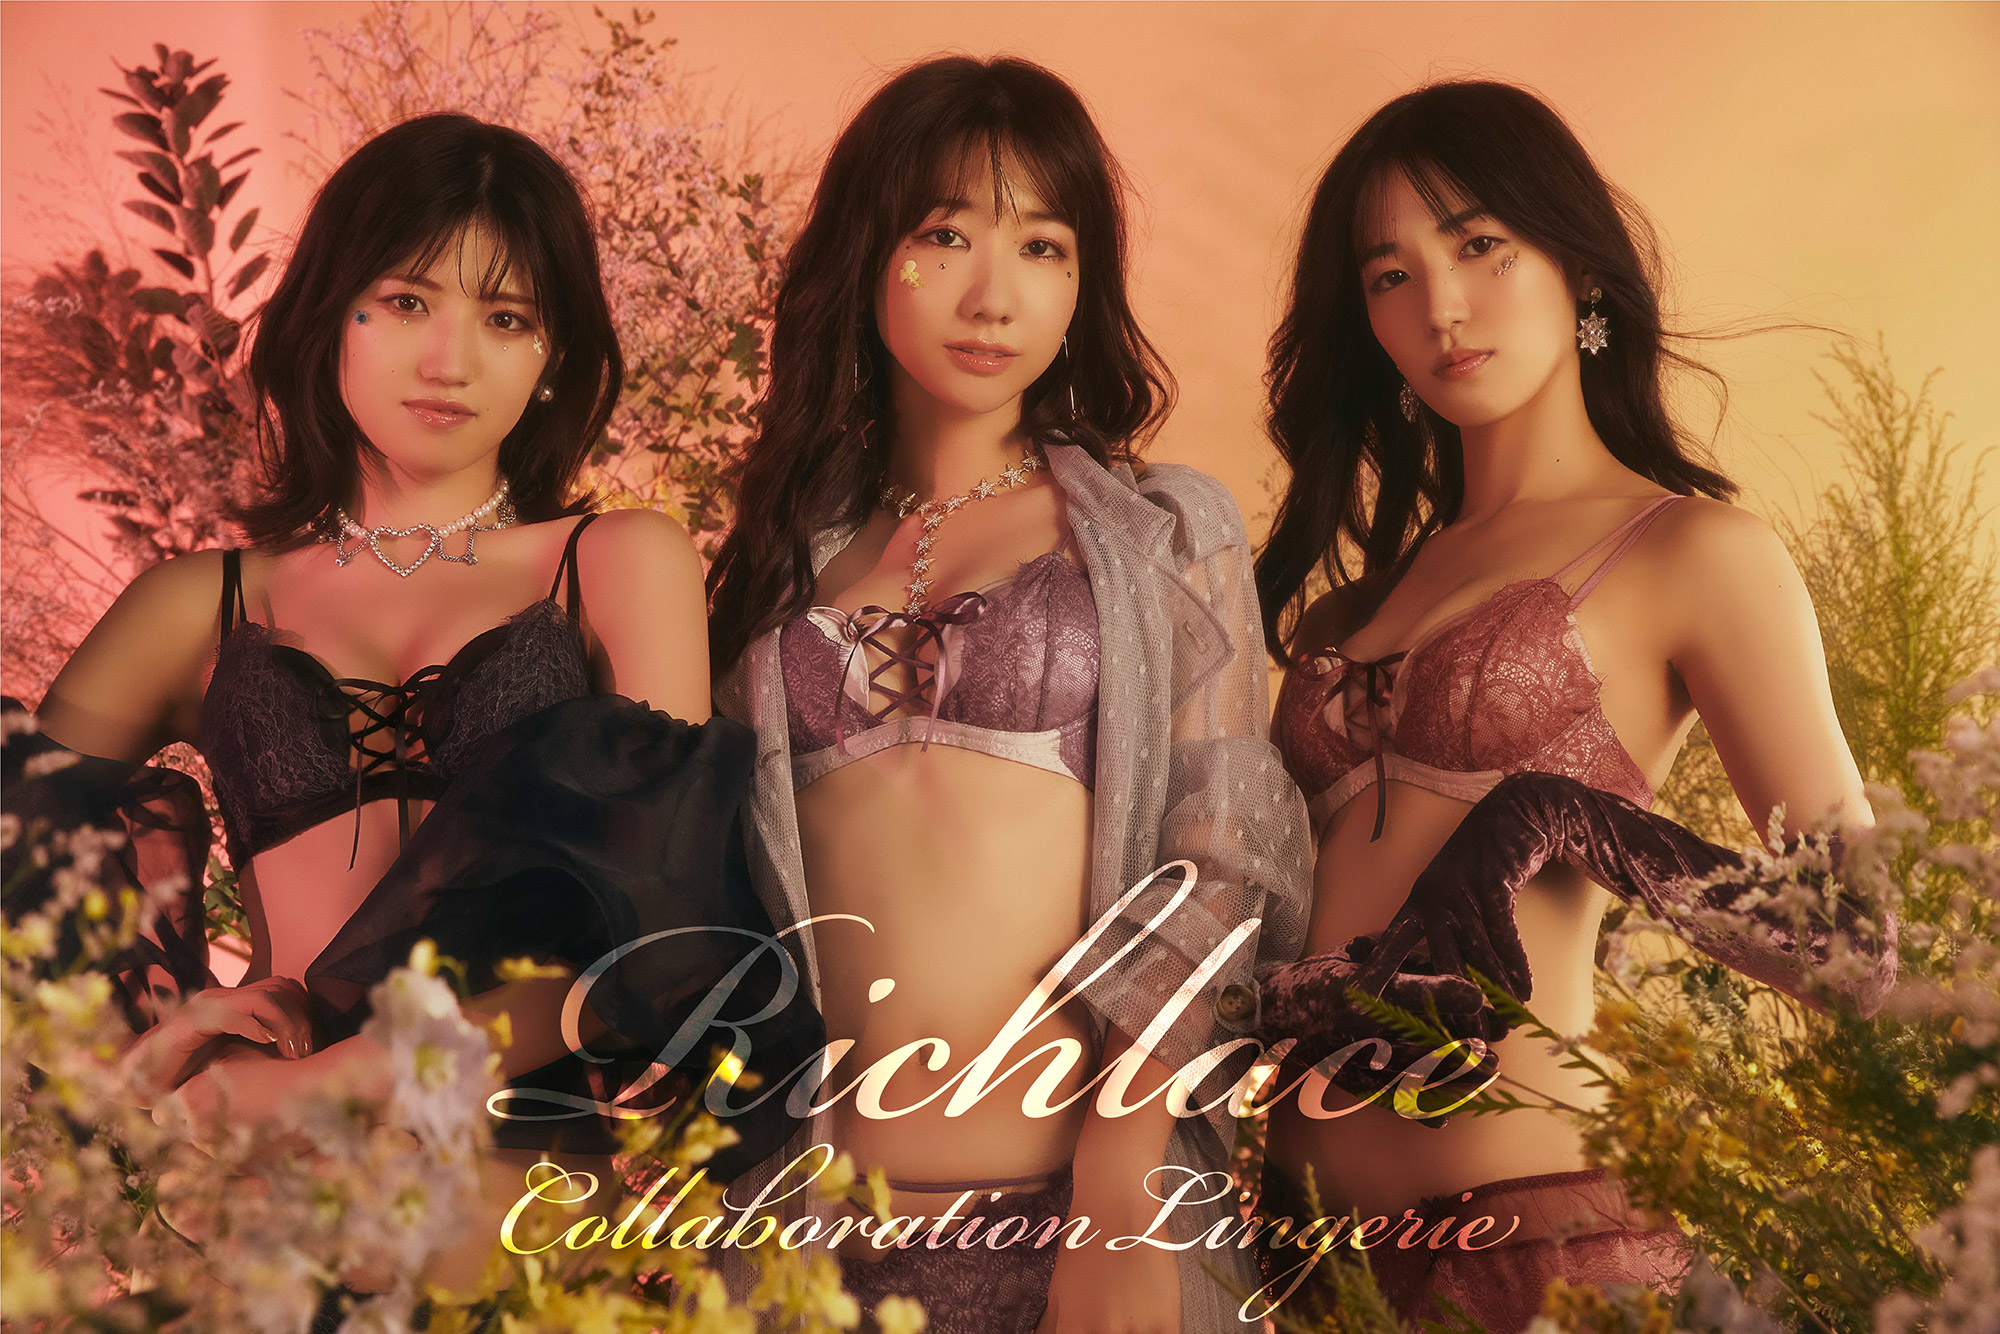 AKB48 x RAVIJOUR - Richlace Collaboration Lingerie